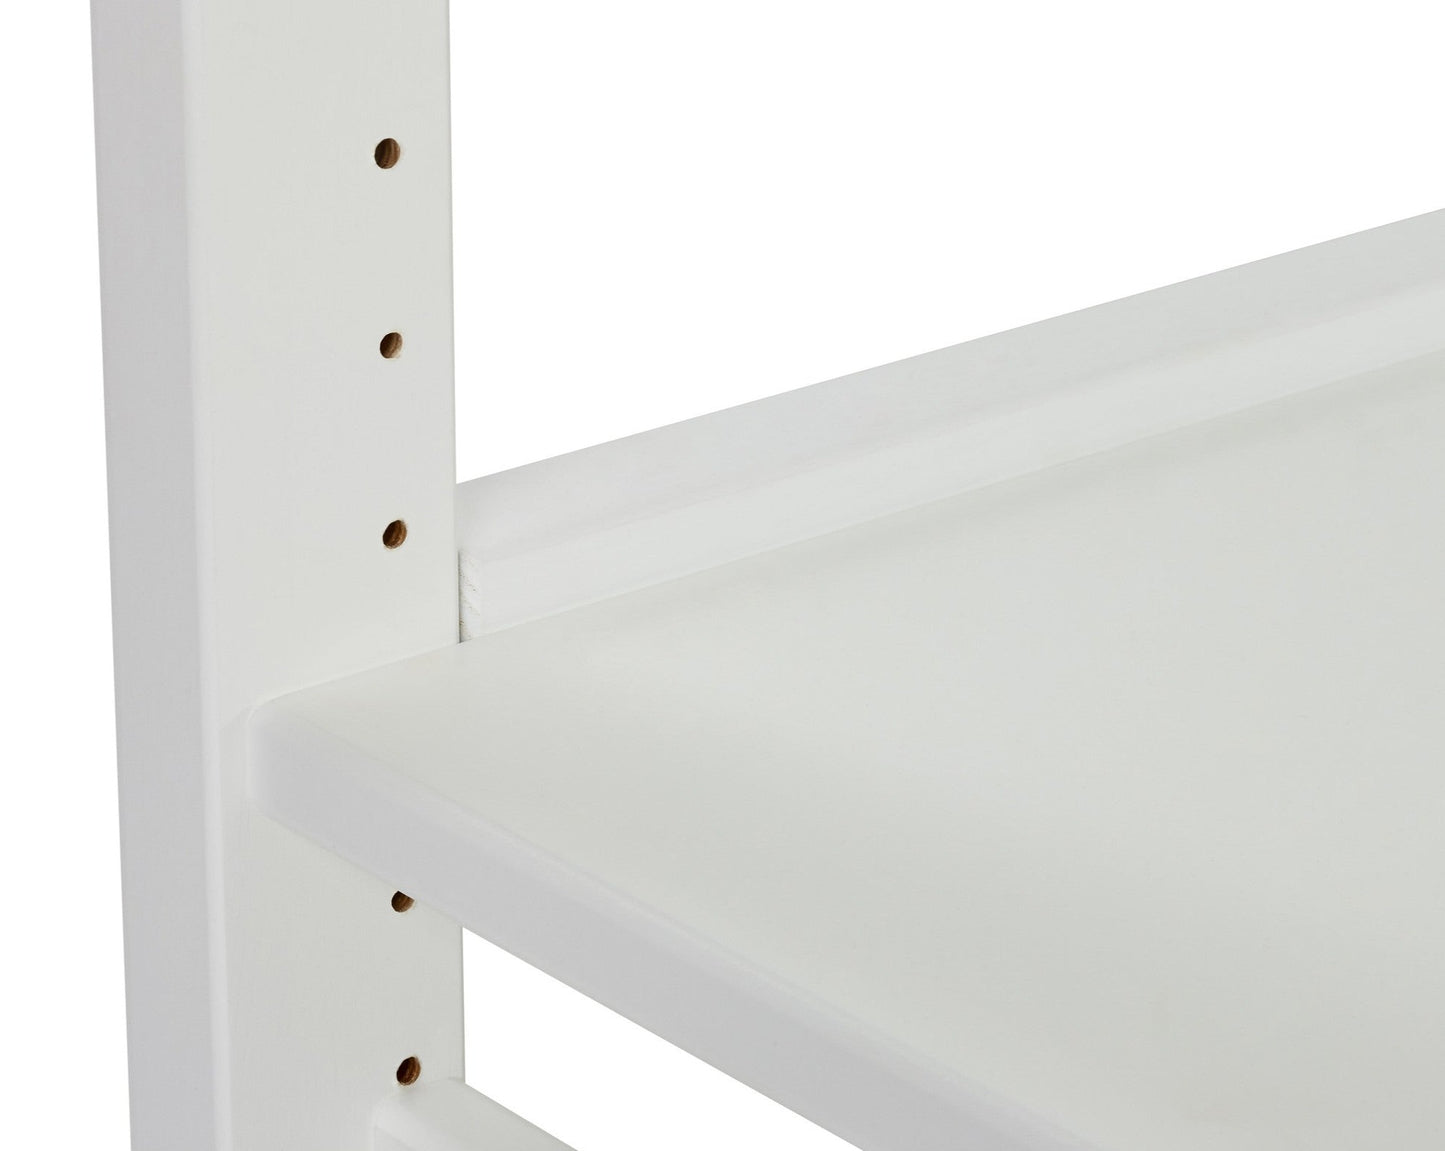 Storey - Set with 2 shelves - 80 cm - White